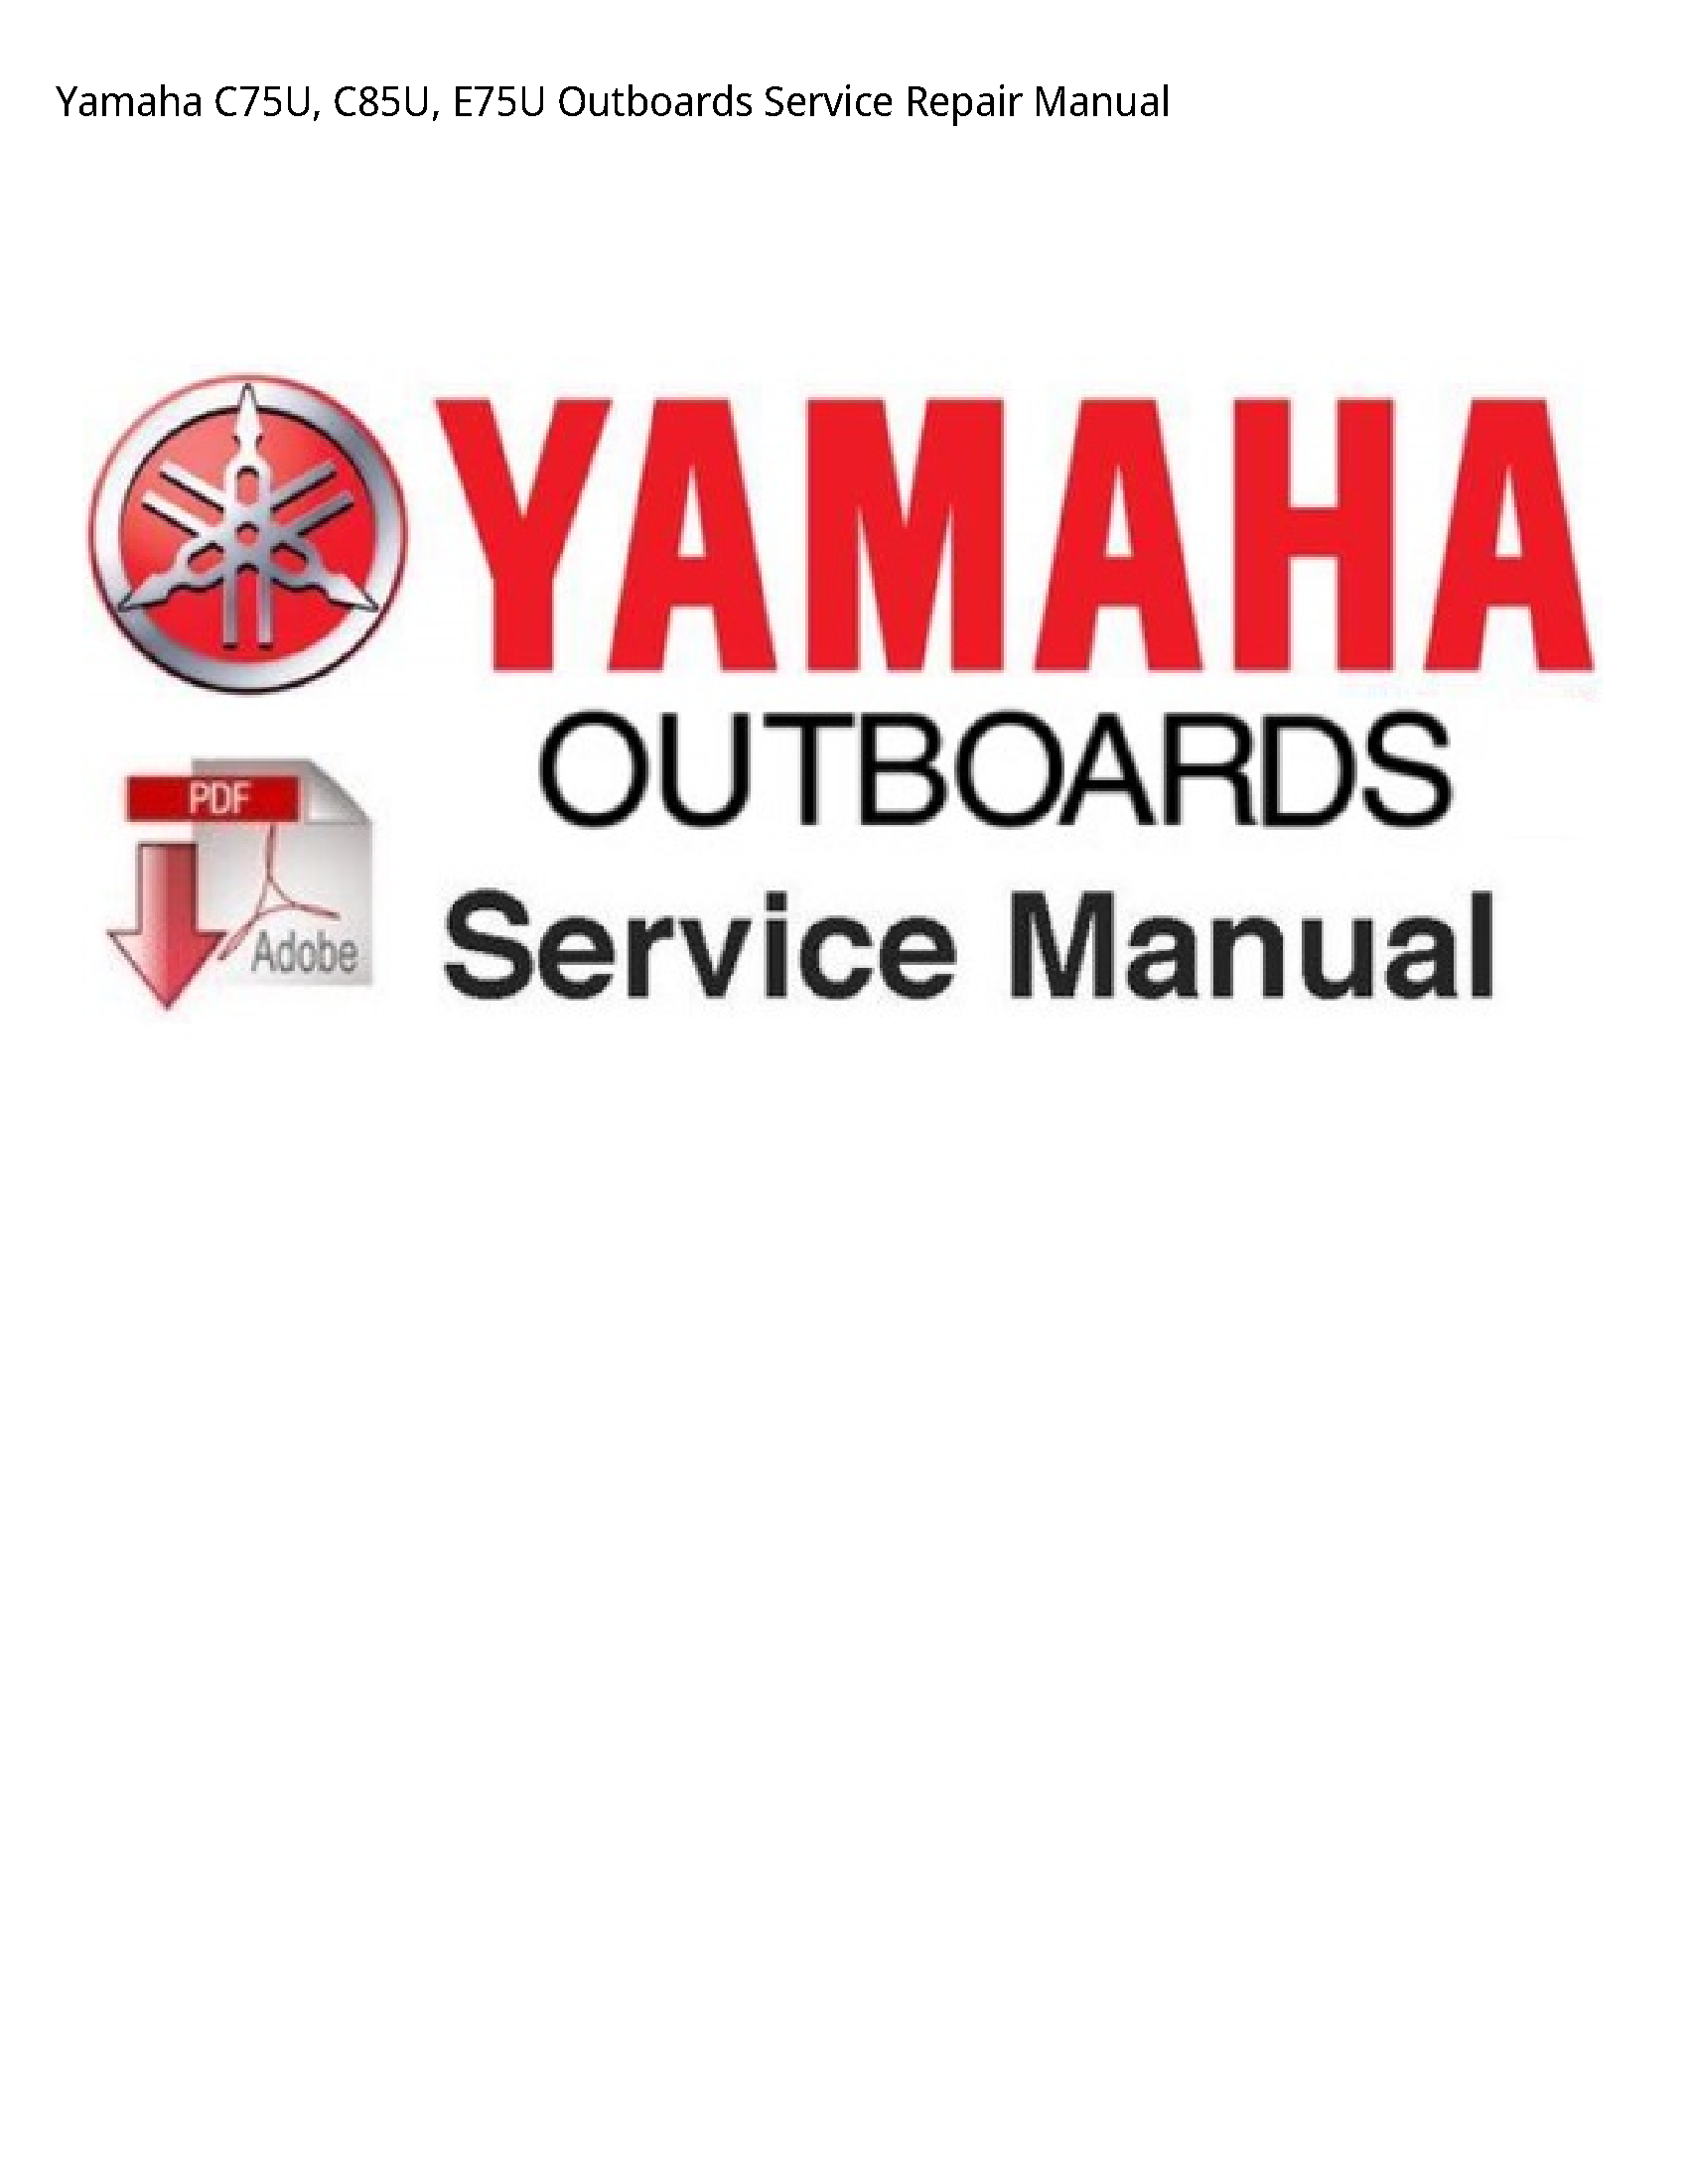 Yamaha C75U Outboards manual